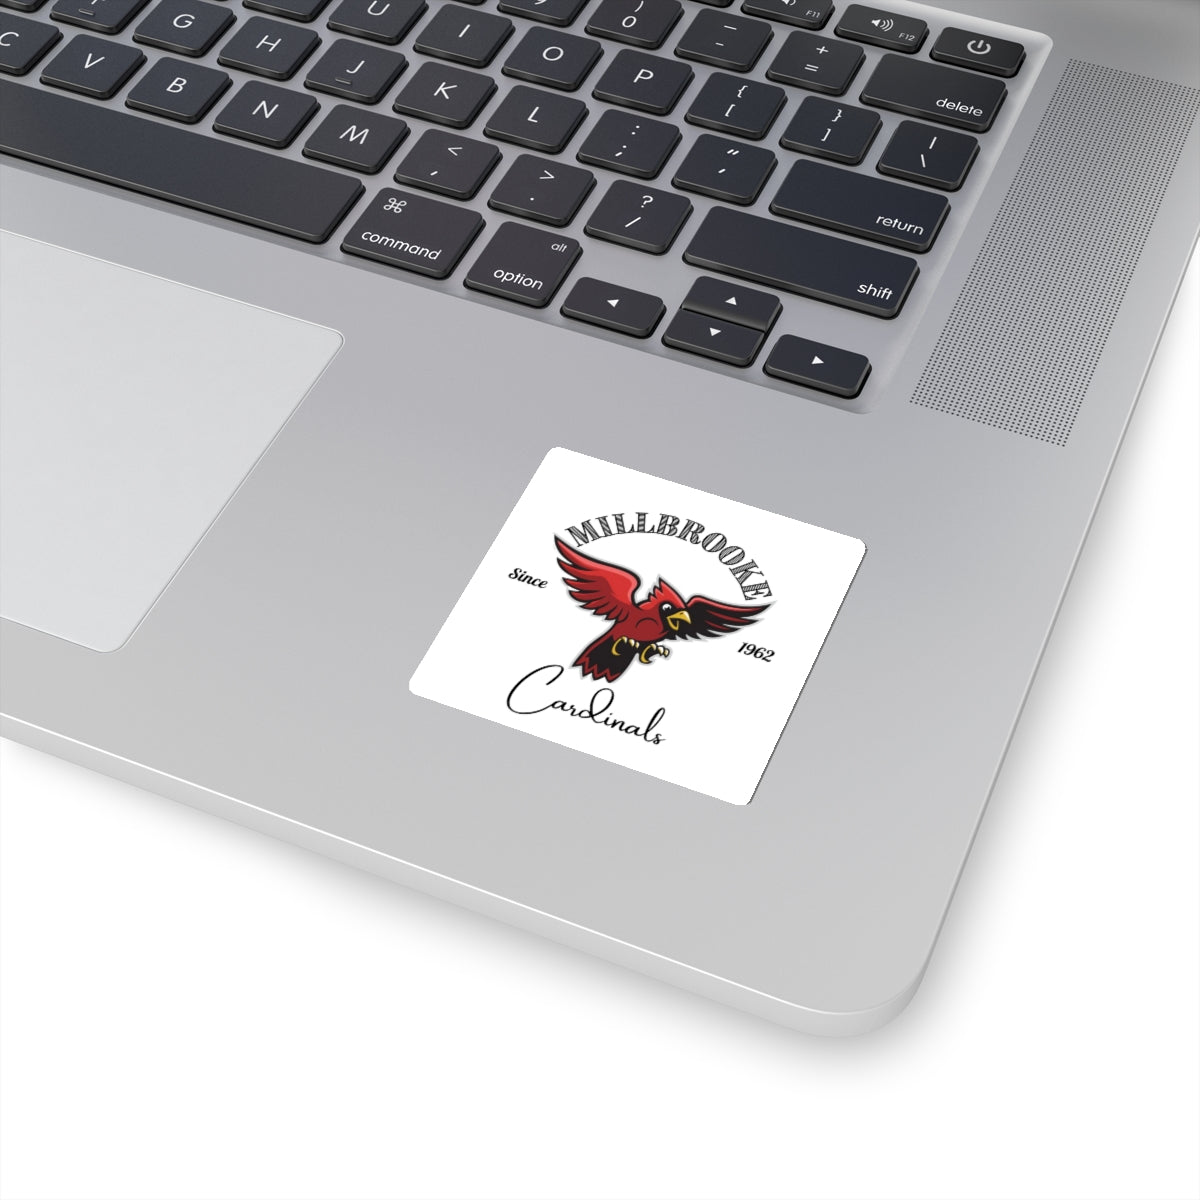 Millbrooke Cardinals Sticker - Live Sandy